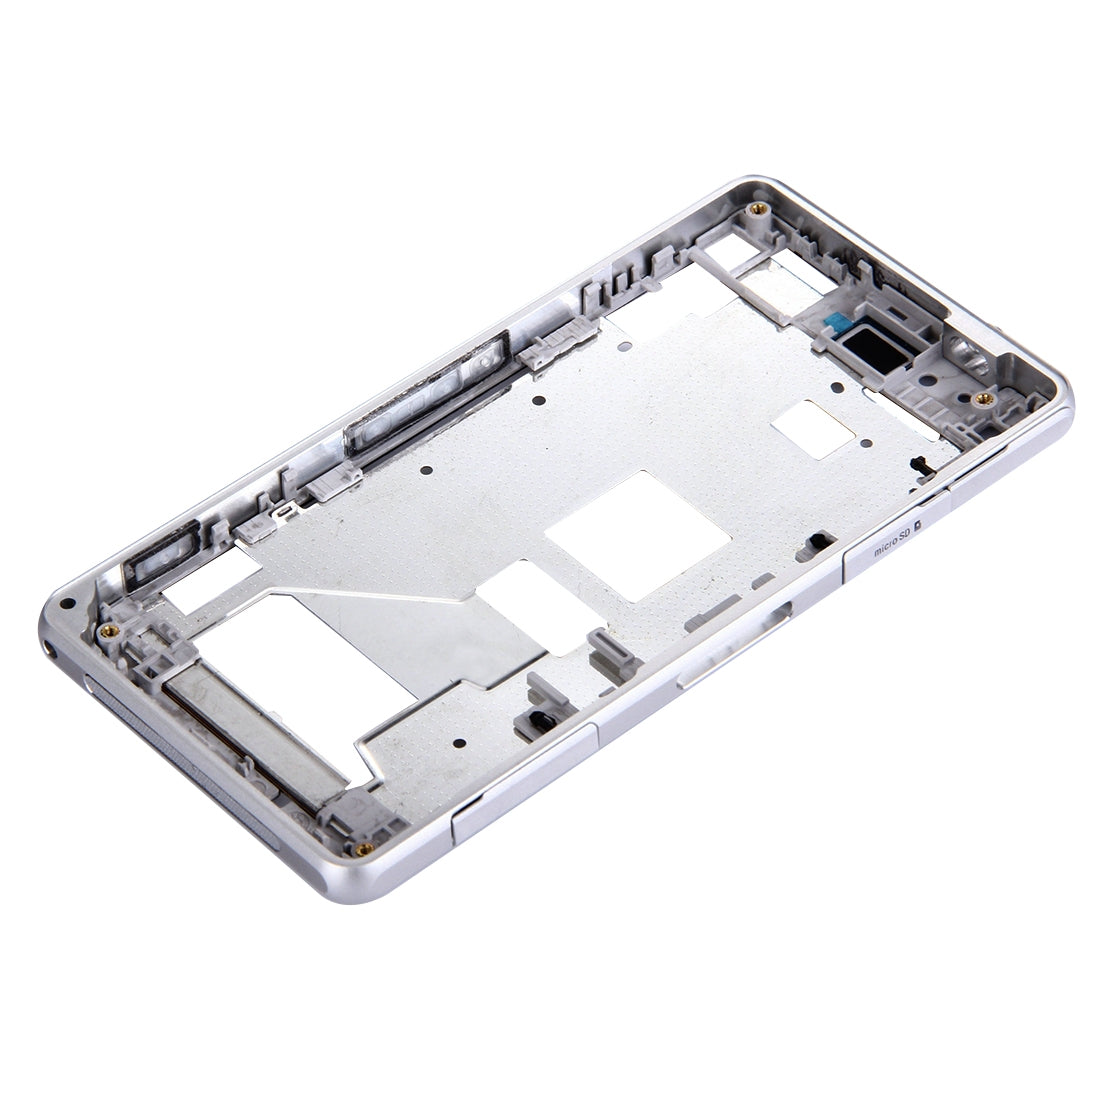 Chassis Intermediate Frame LCD Sony Xperia Z1 Compact / Mini White